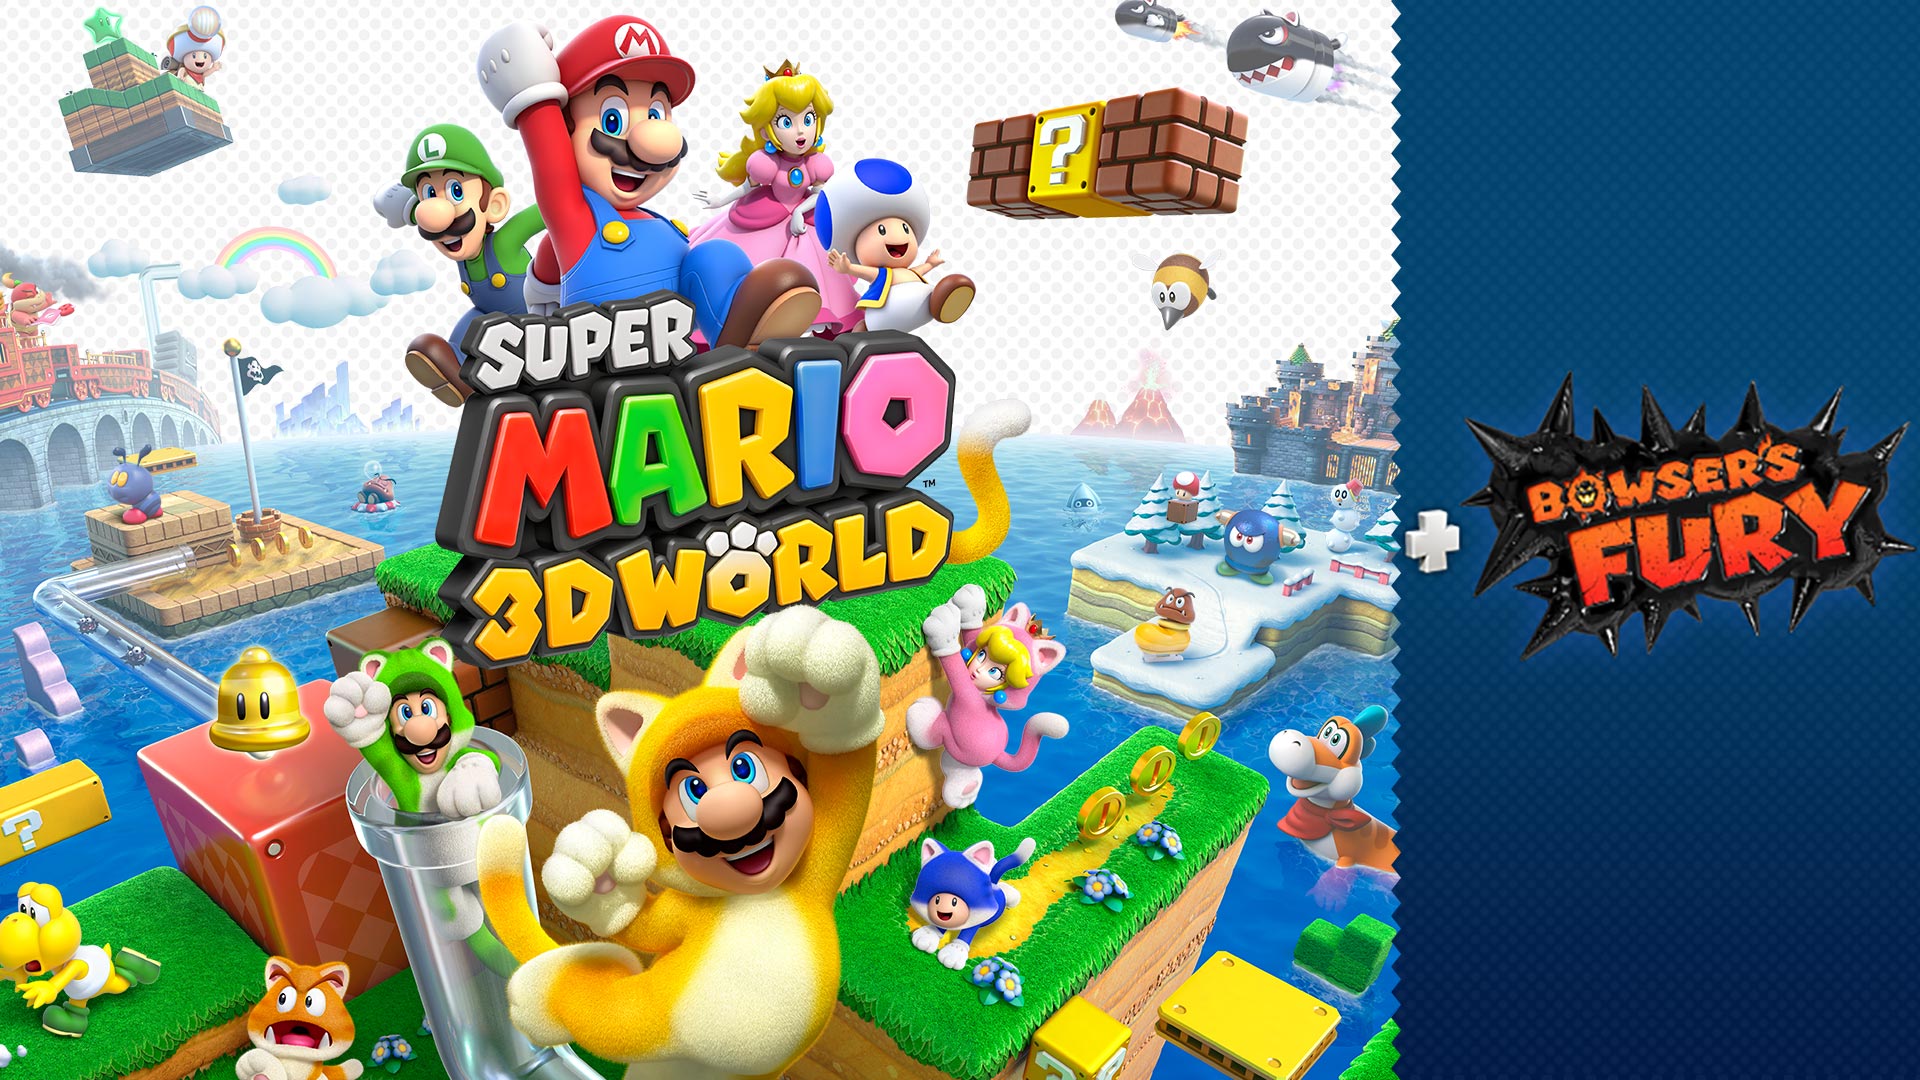 super mario 3d world deluxe release date